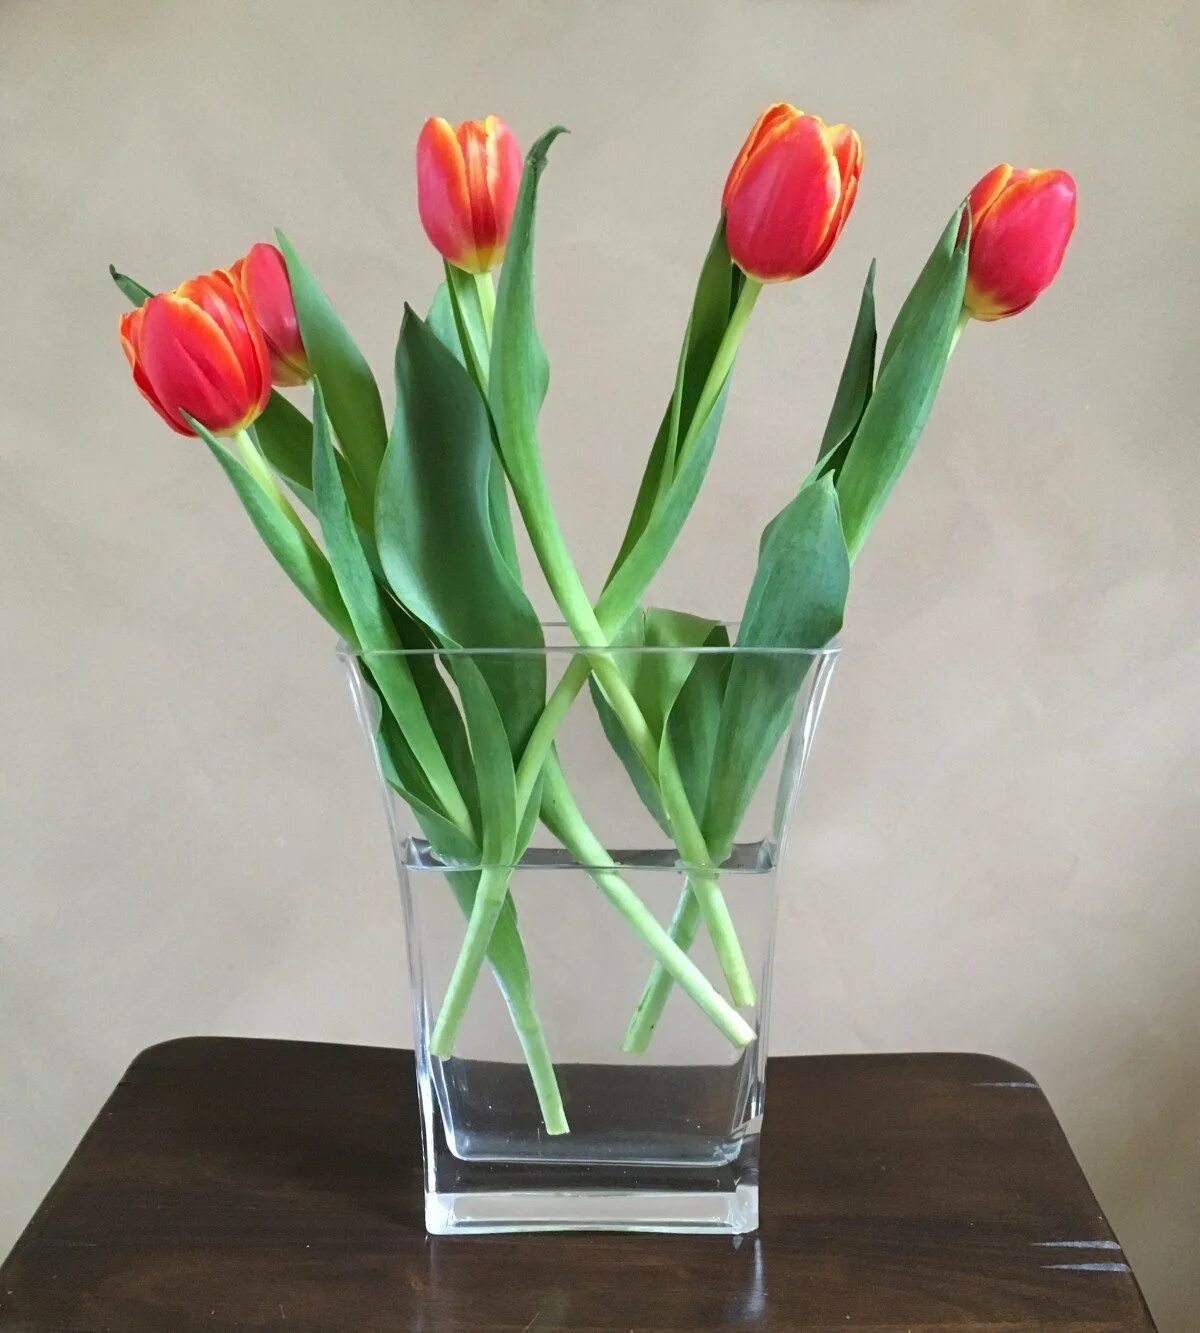 Какая вода для тюльпанов в вазе. Тюльпаны в вазе. Вазы для тюльпанов. Тюльпаны в стеклянной вазе. Дульбаны в ваззе.